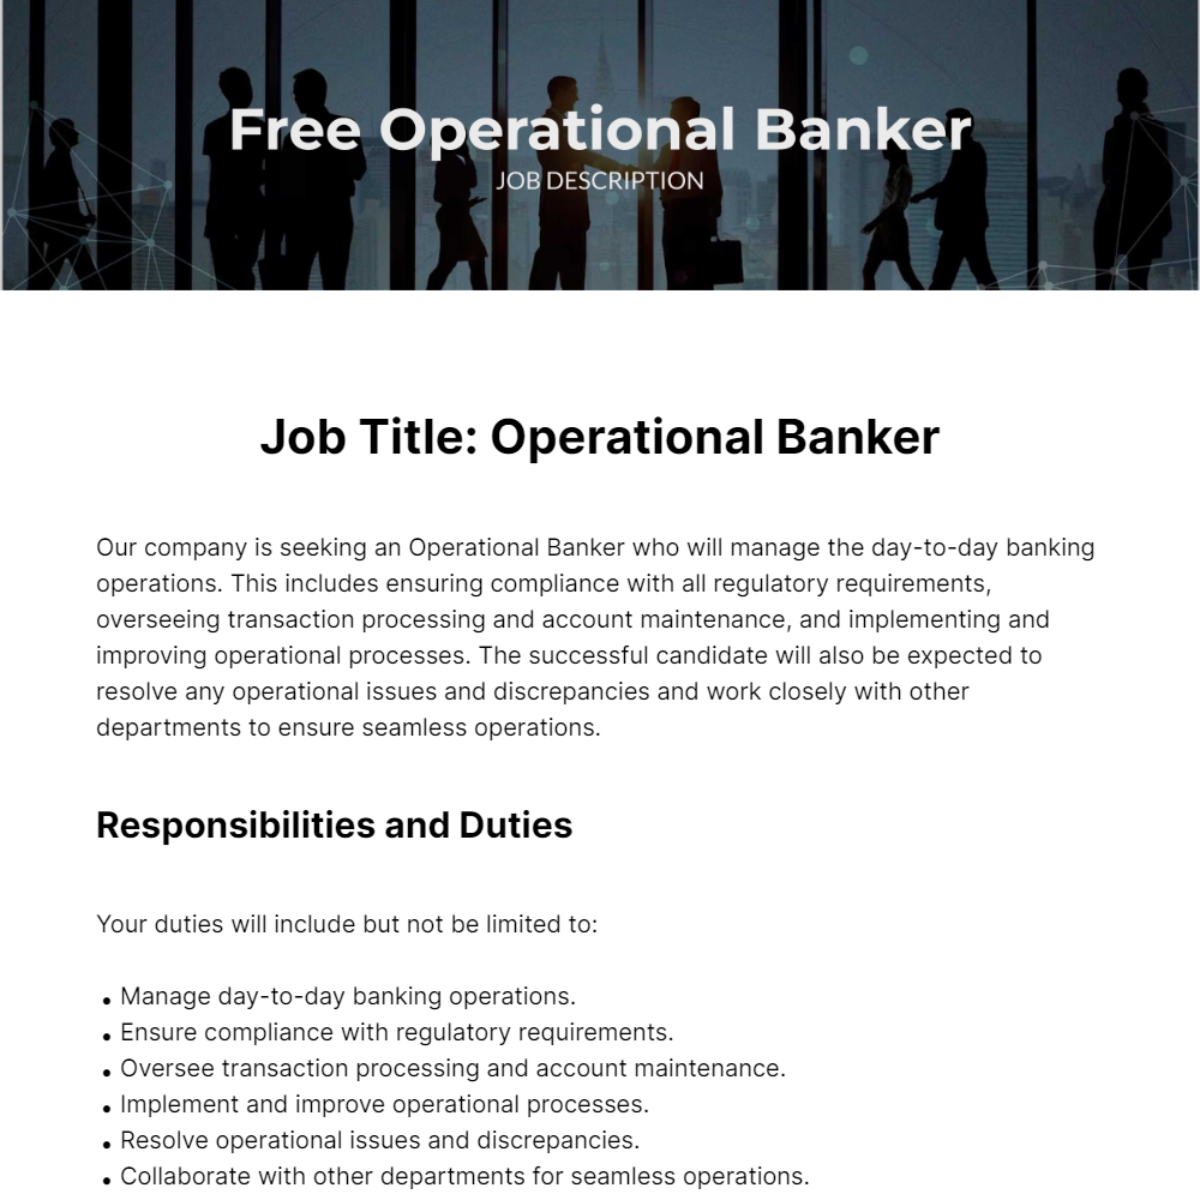 Free Operational Banker Job Description Template